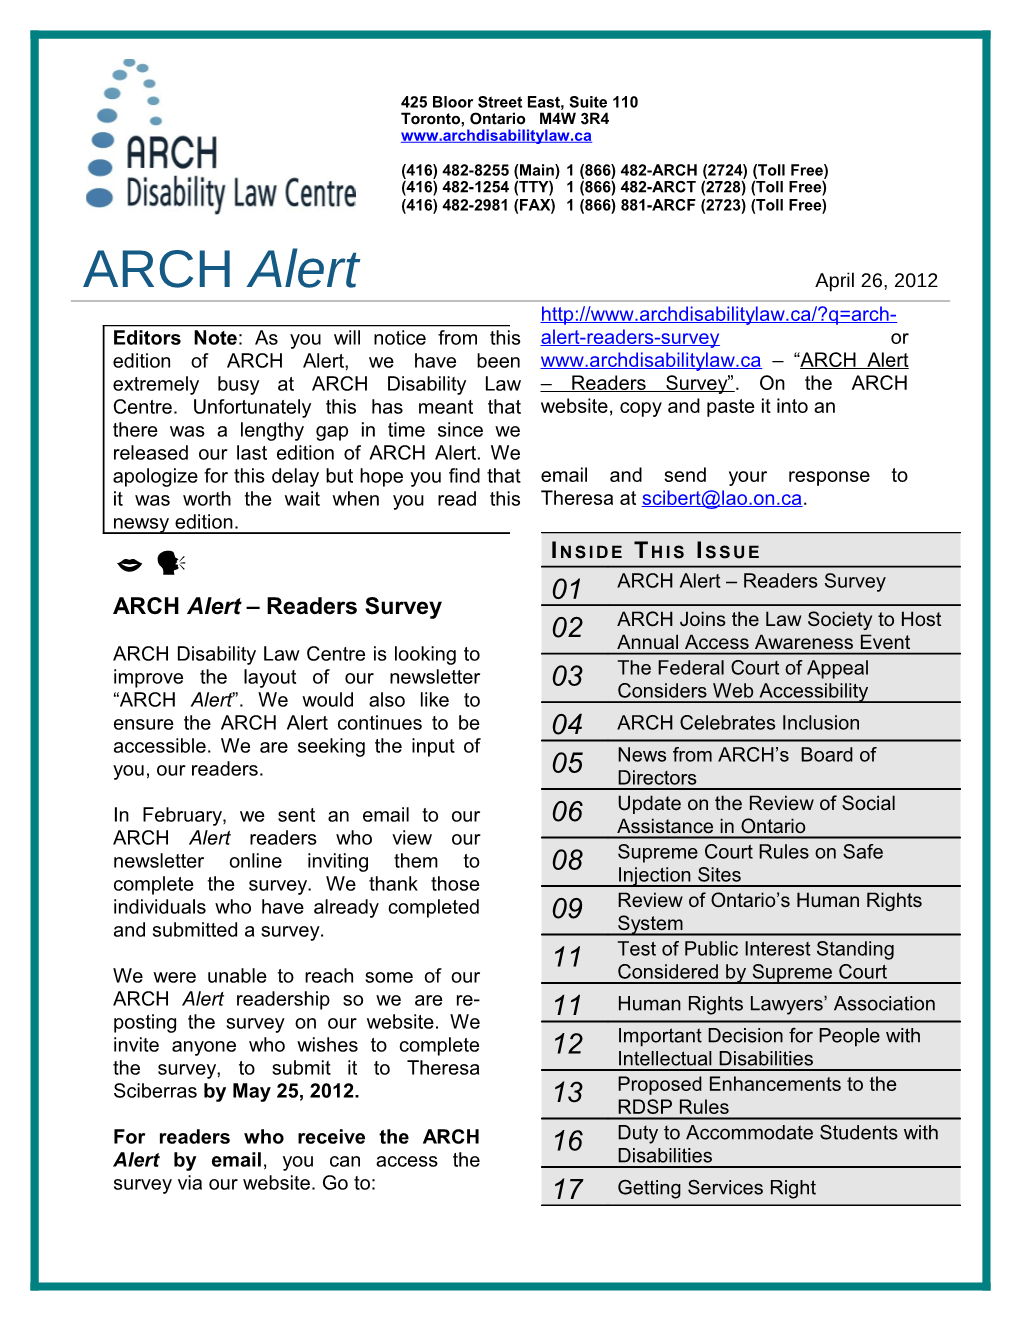 ARCH Alert Readers Survey